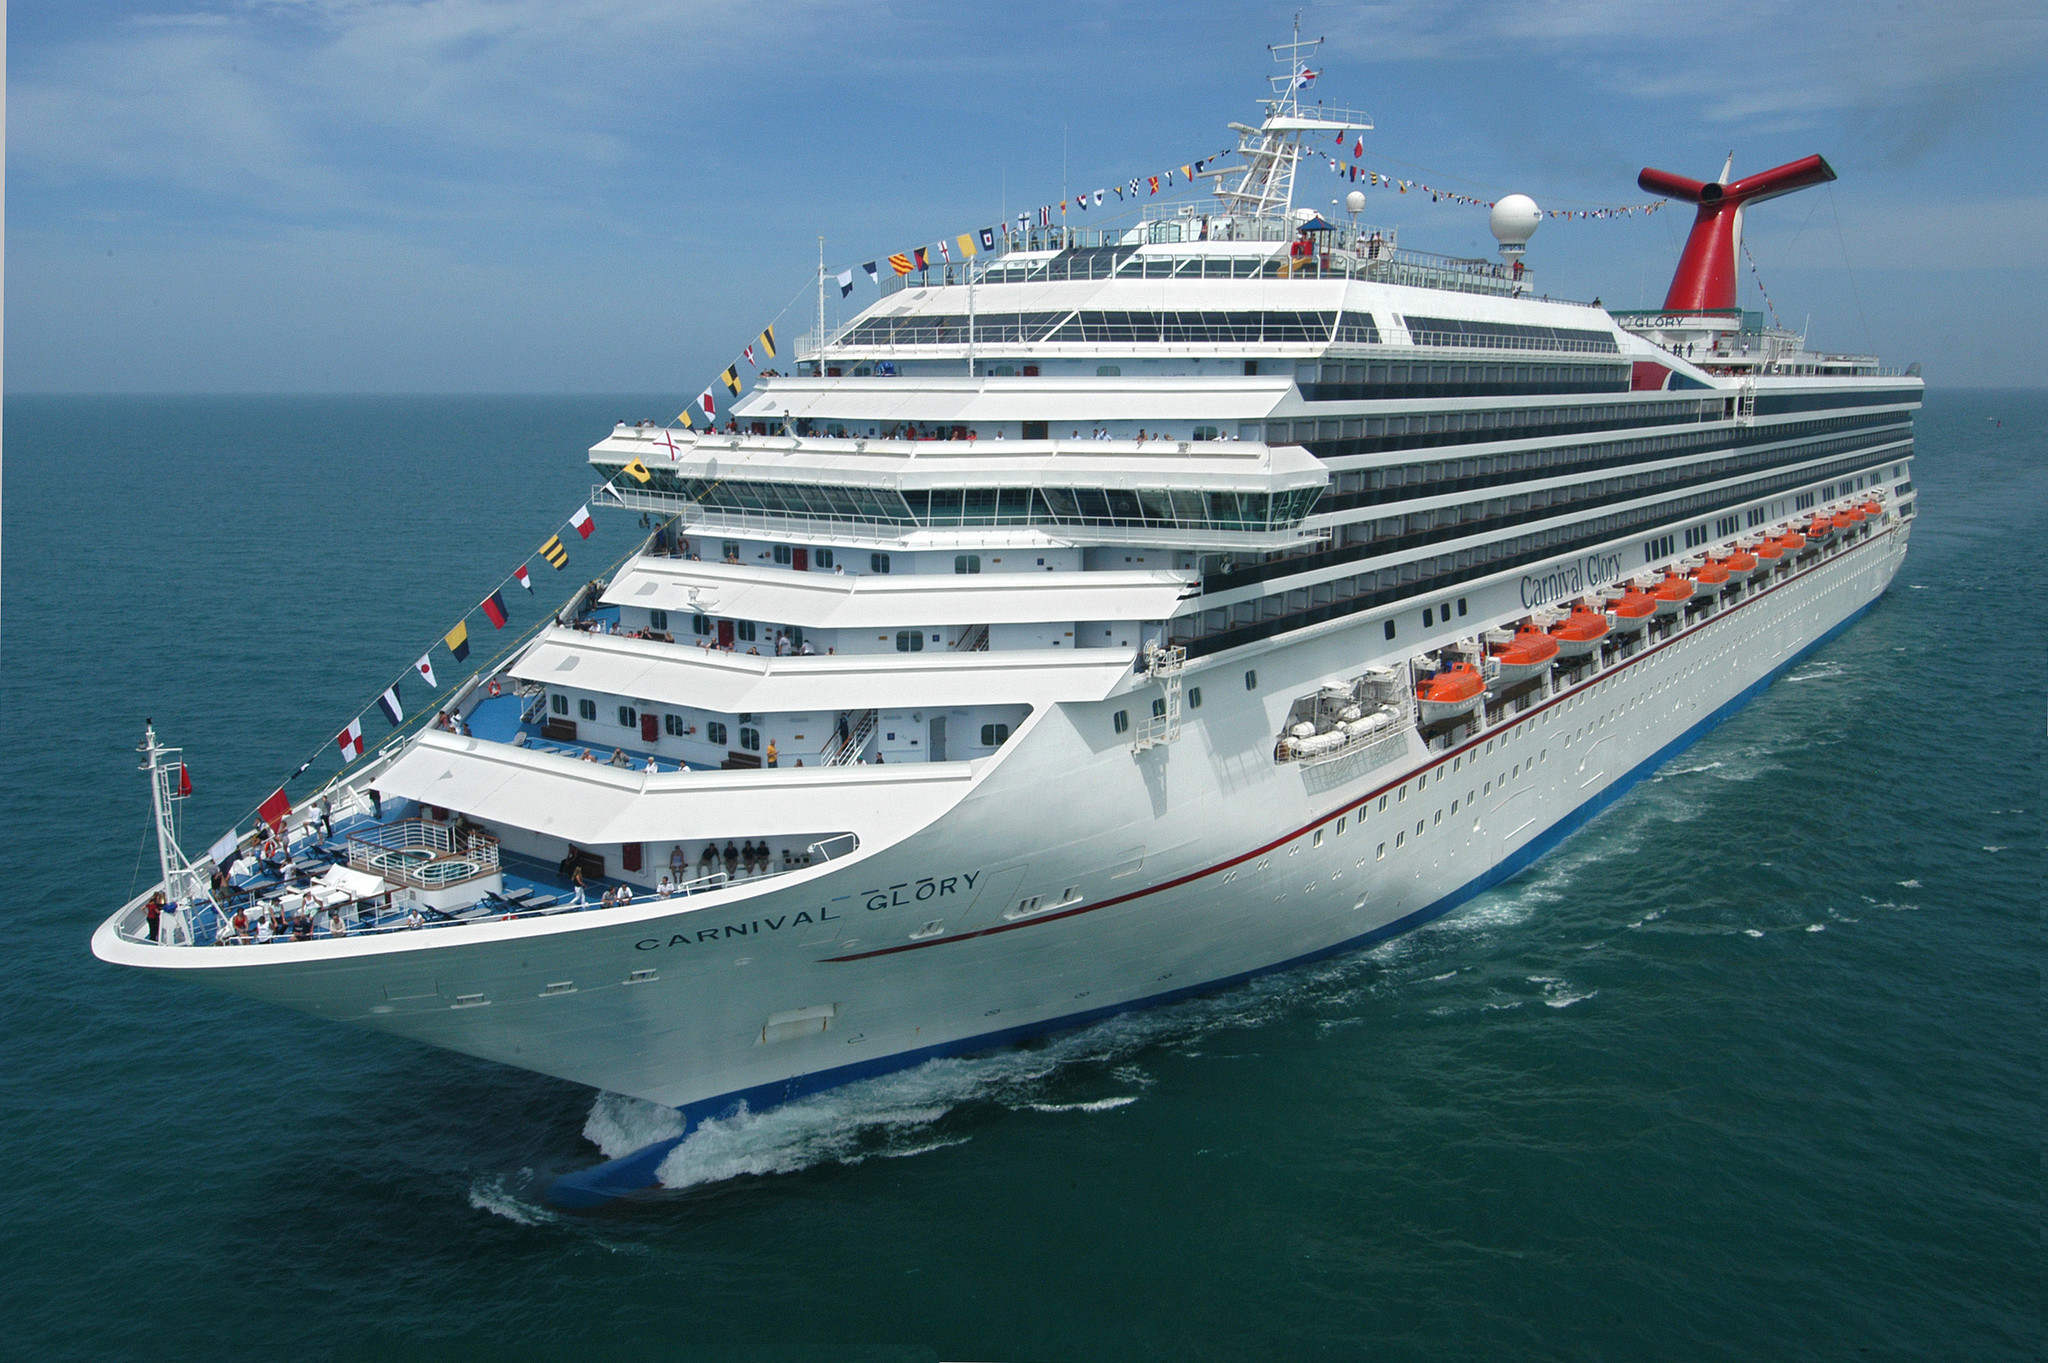 cruise ship wallpaper,cruise ship,vehicle,water transportation,ship,cruiseferry